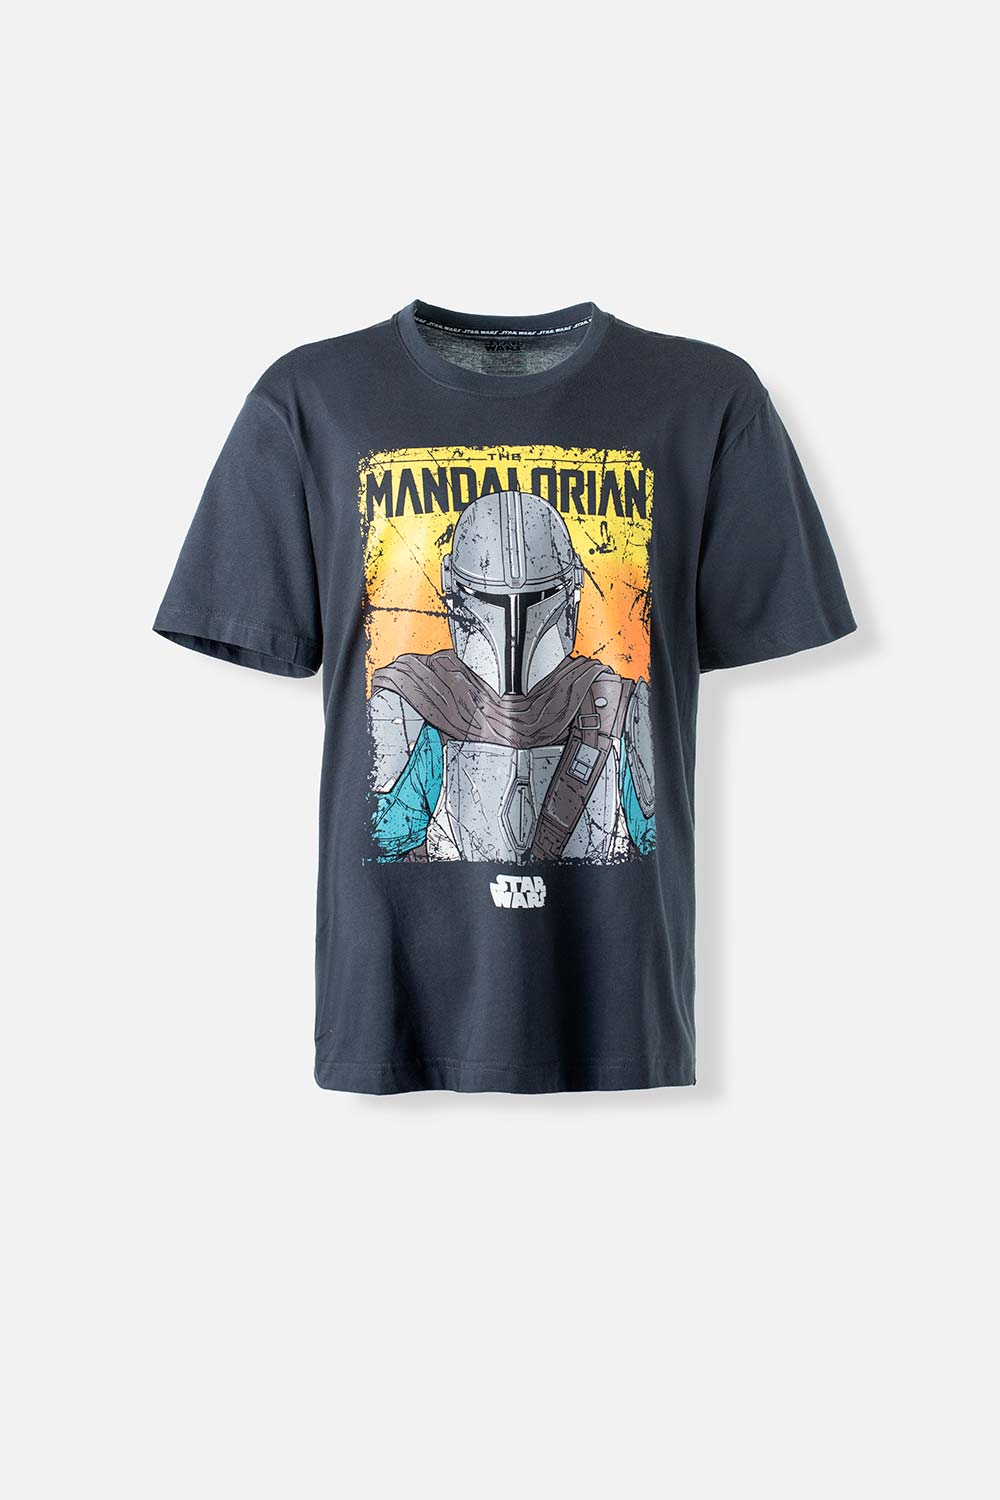 Camiseta de Mandalorian manga corta gris para hombre S-0